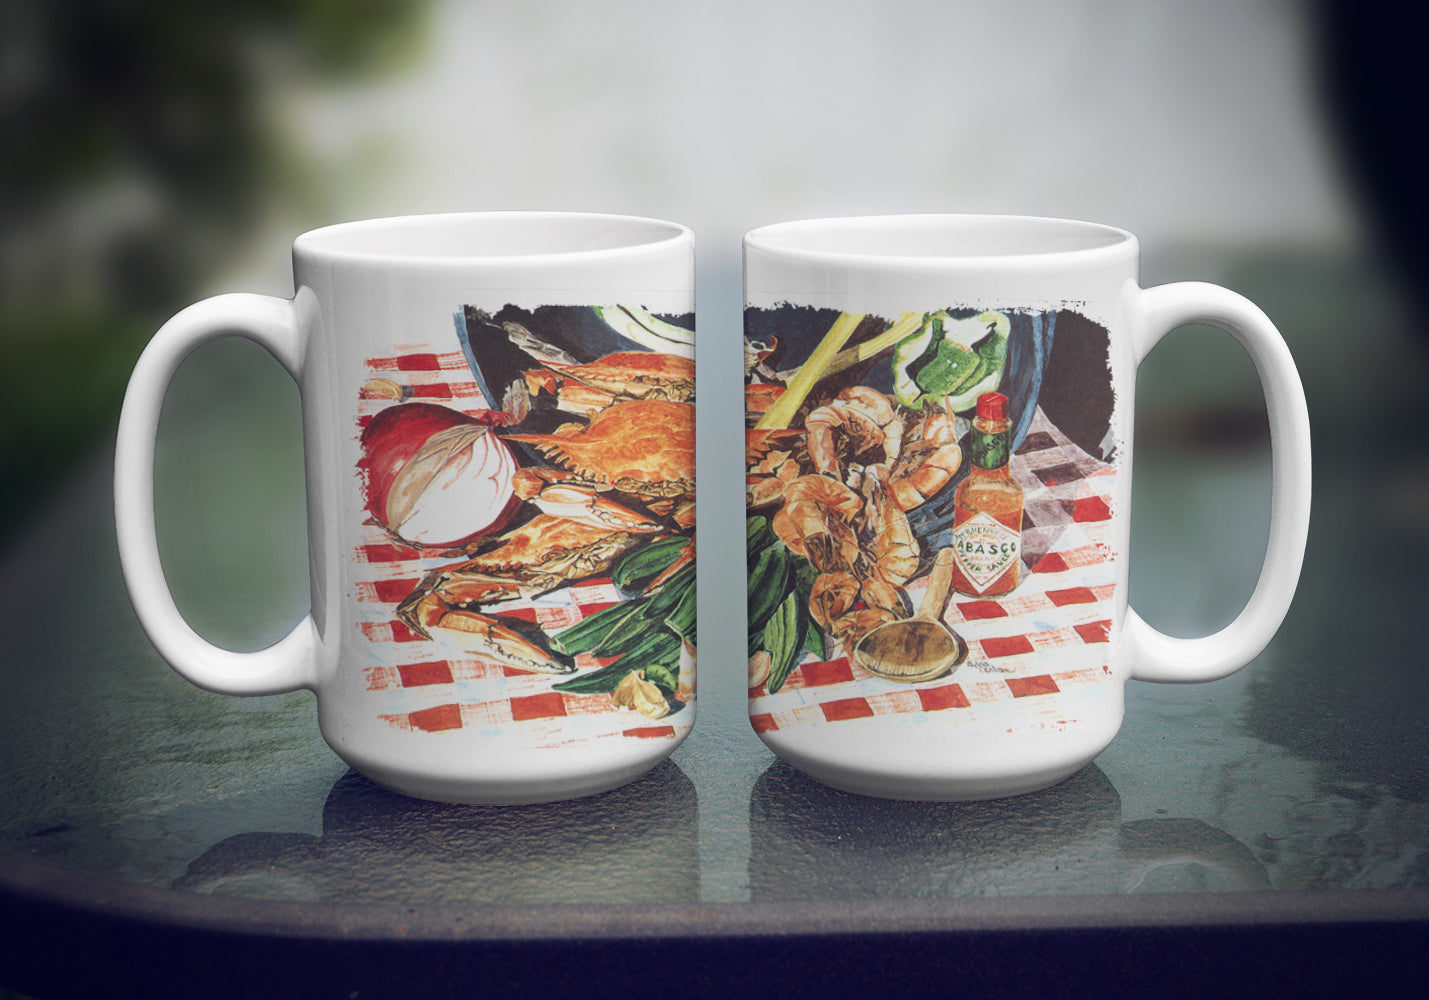 Crab Boil Dishwasher Safe Microwavable Ceramic Coffee Mug 15 ounce 8537CM15